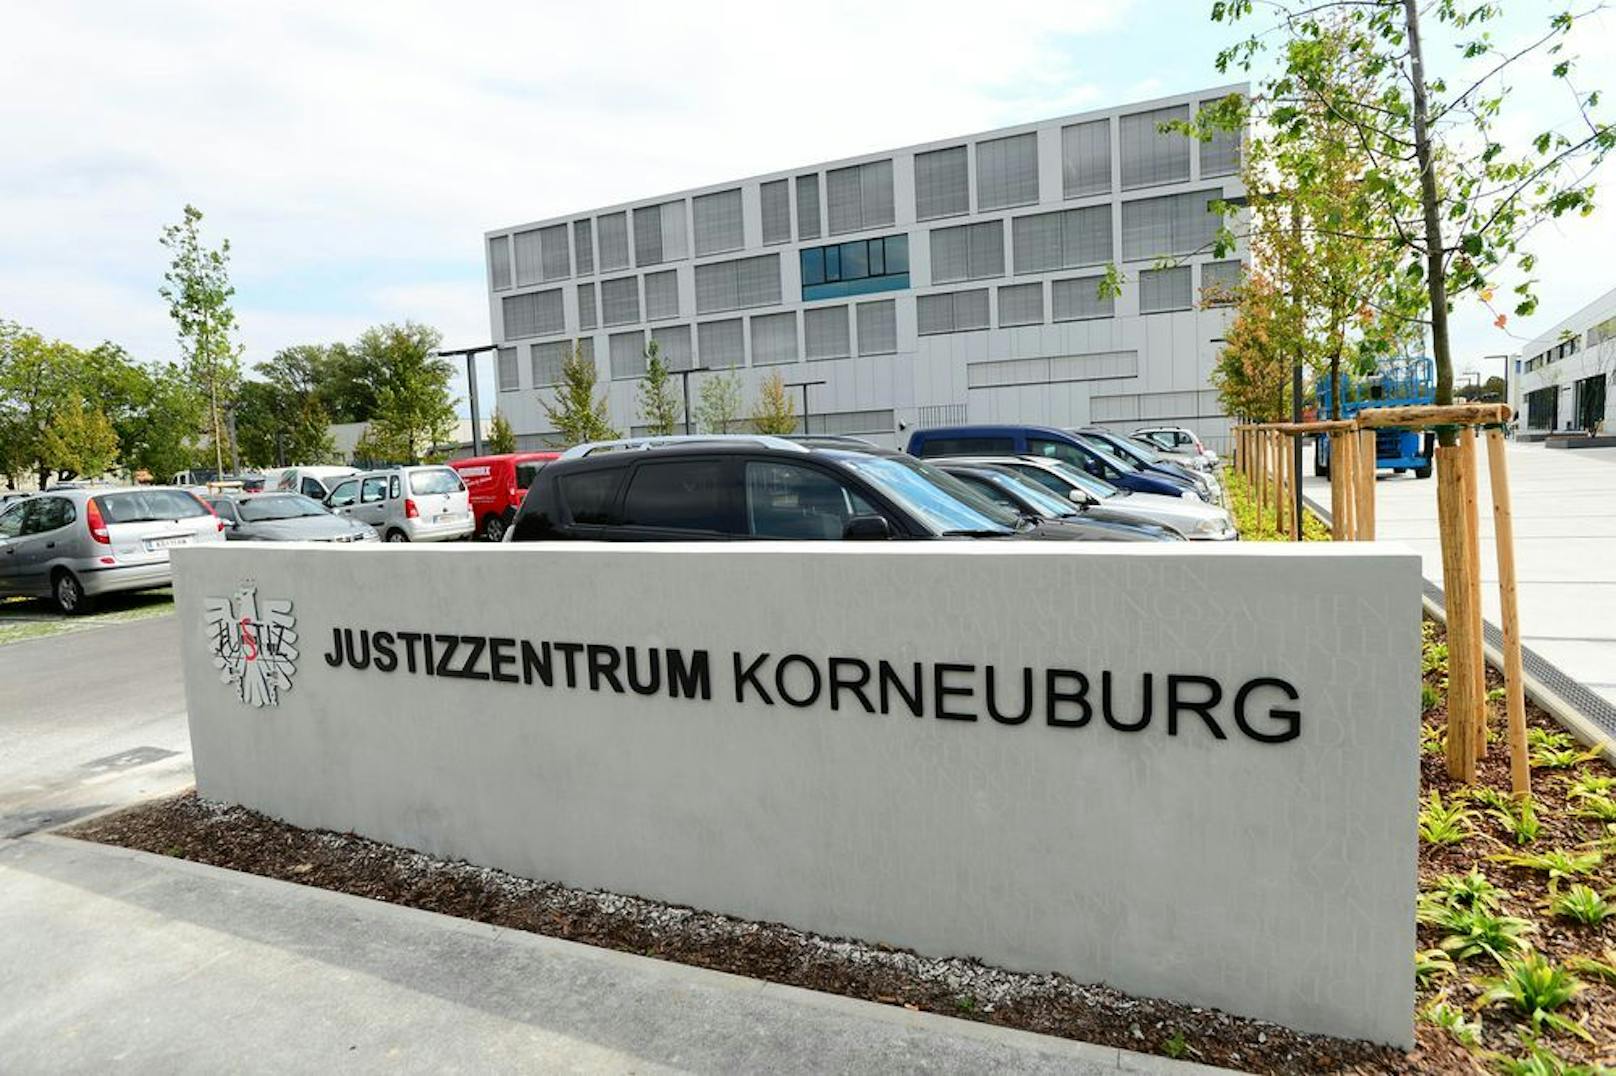 Justizzentrum Korneuburg